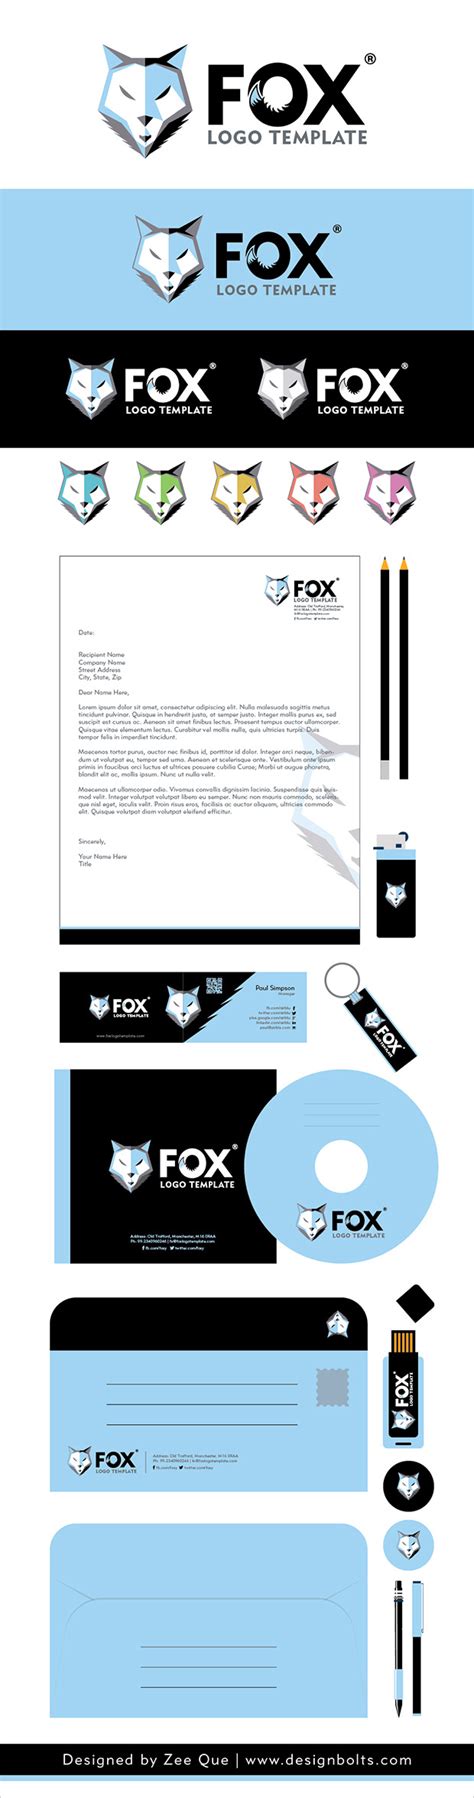 Premium Vector Logo Design, Business Card, & Various Stationery Items ...